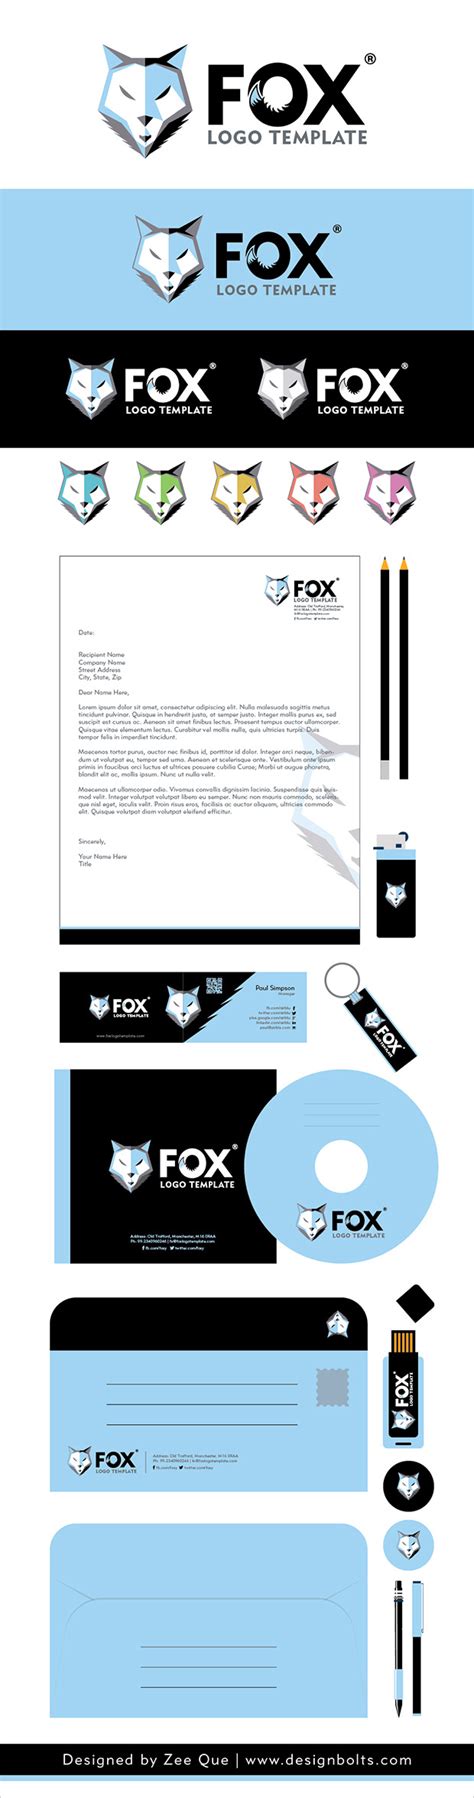 Premium Vector Logo Design, Business Card, & Various Stationery Items ...